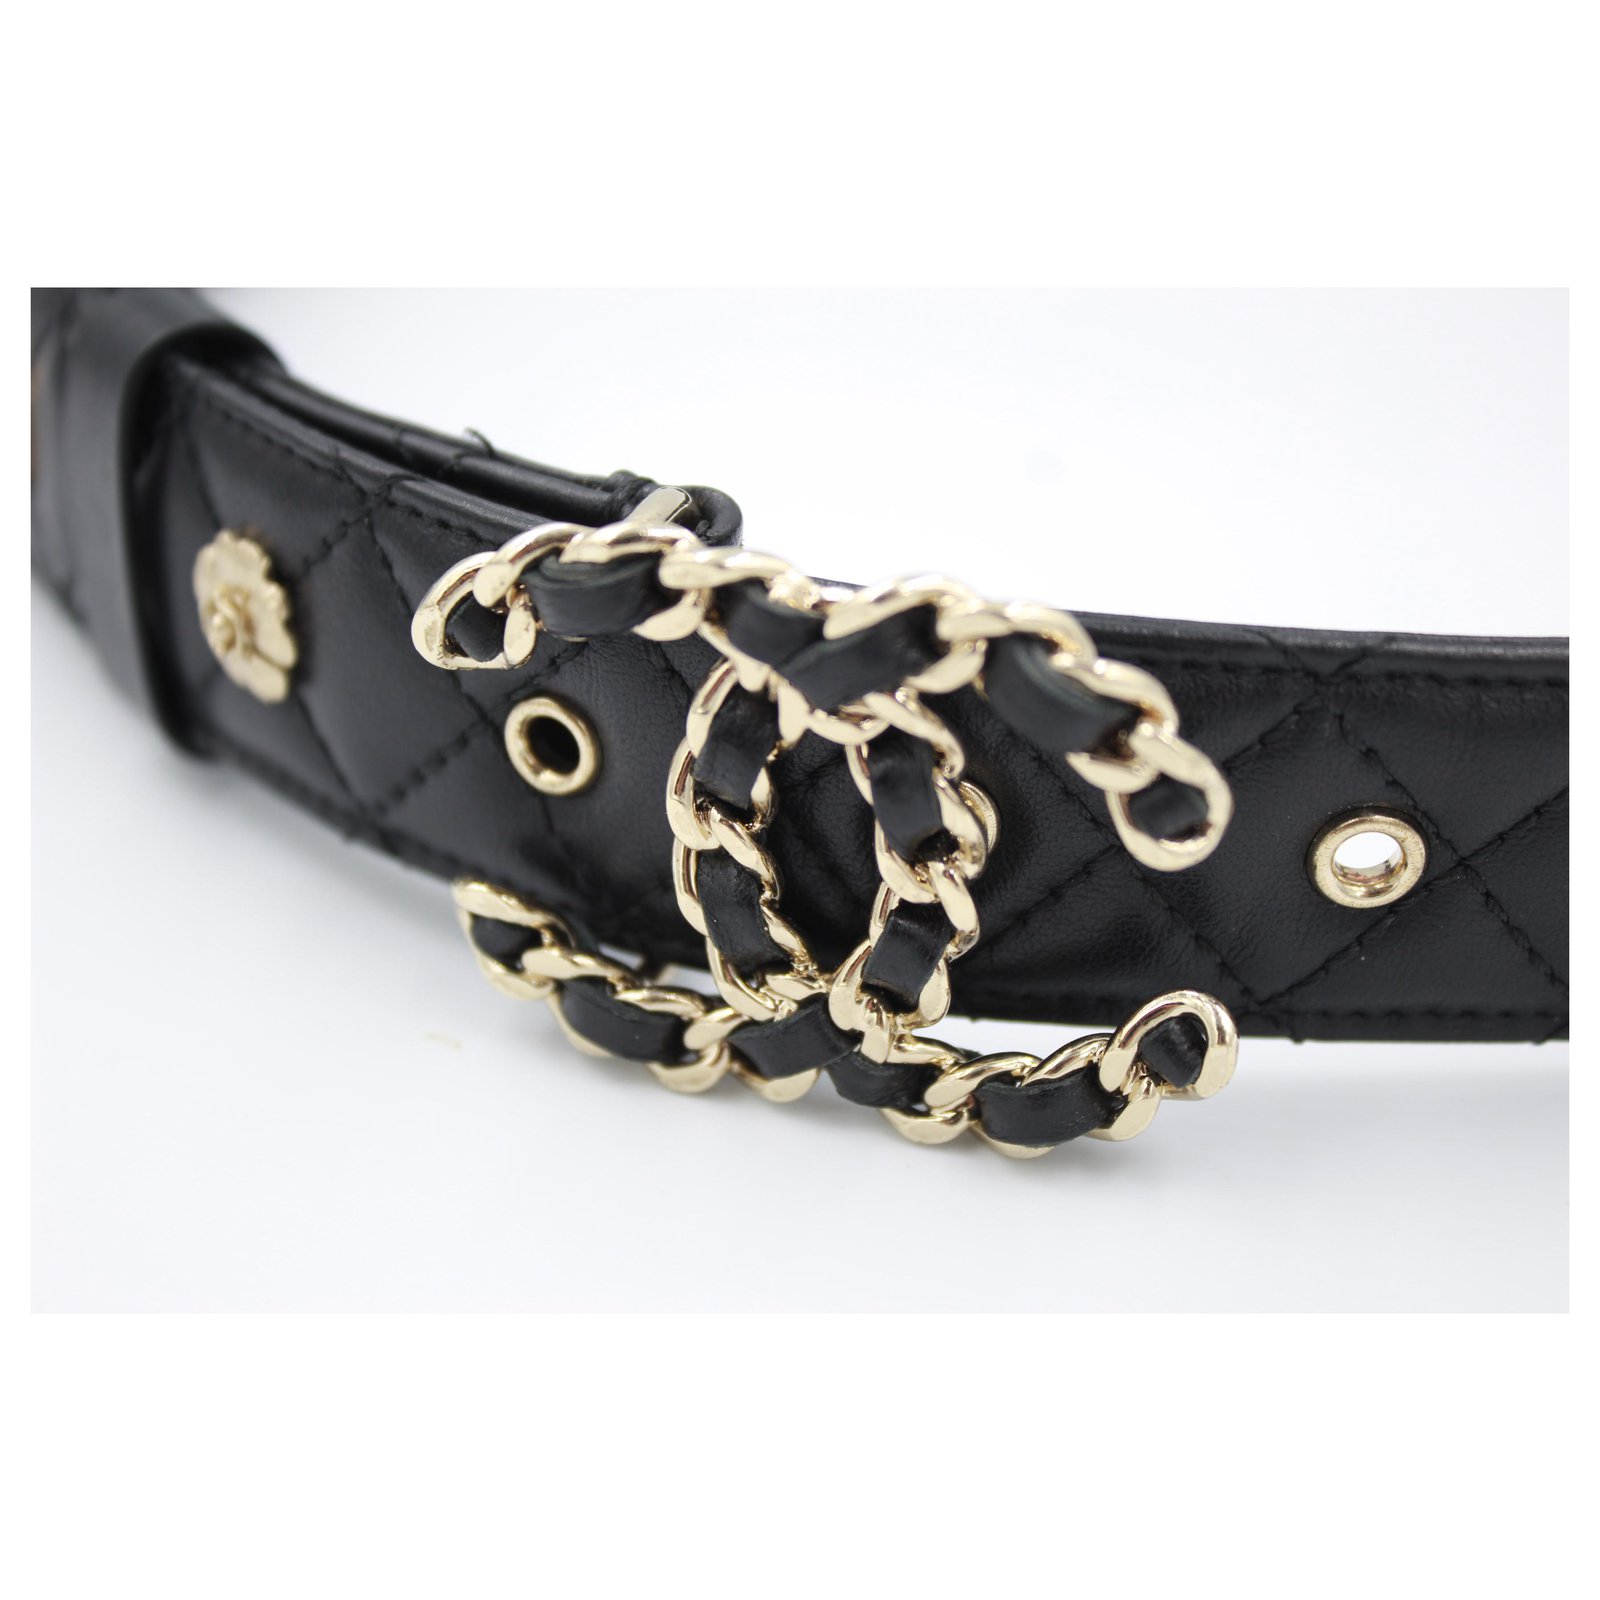 Chanel belt in black leather.